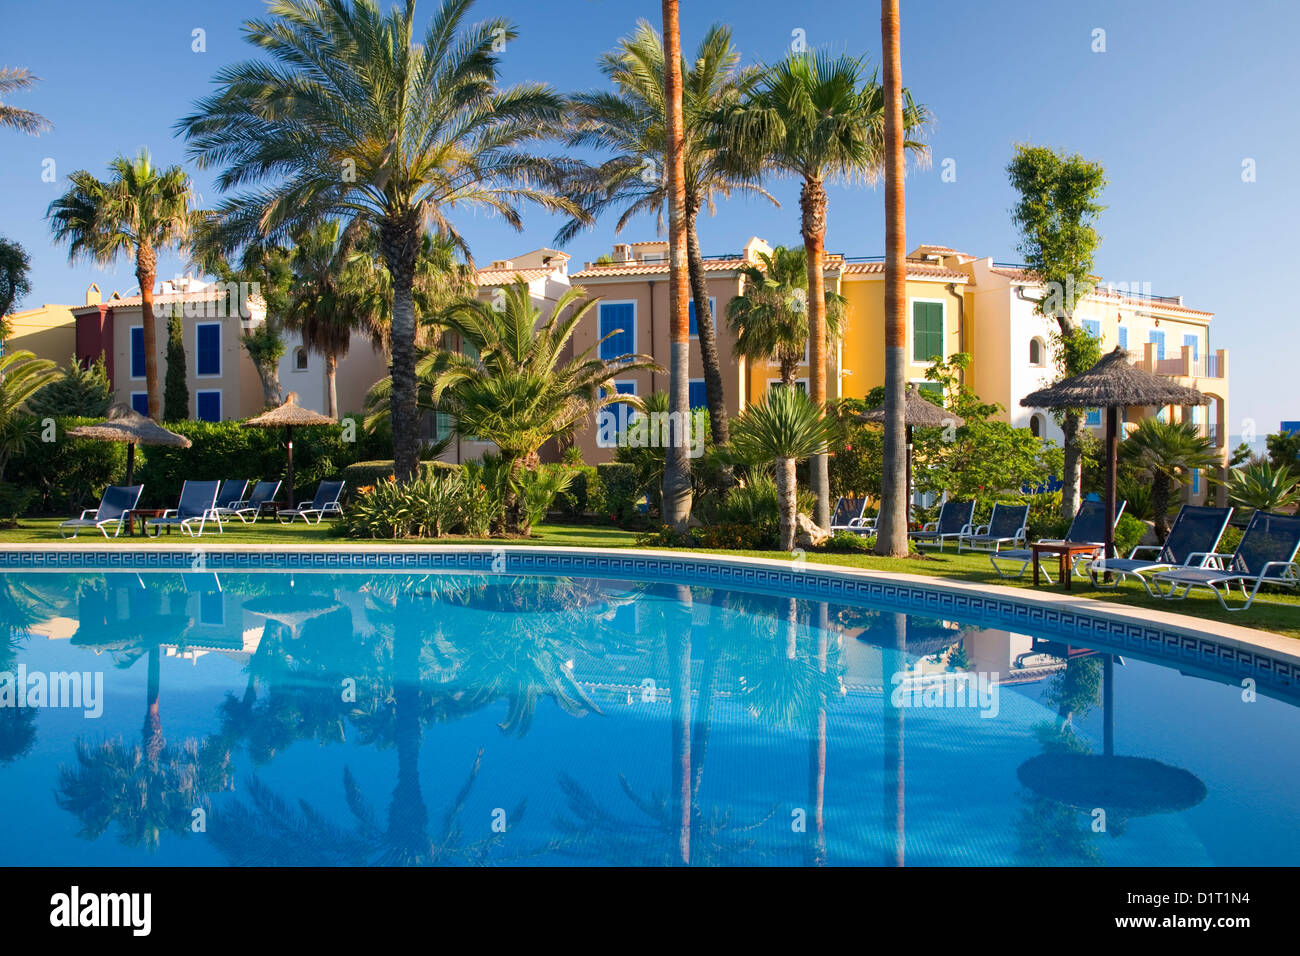 Colònia de Sant Pere, Mallorca, Balearic Islands, Spain. View across pool to luxury apartment complex set amongst palm-trees. Stock Photo